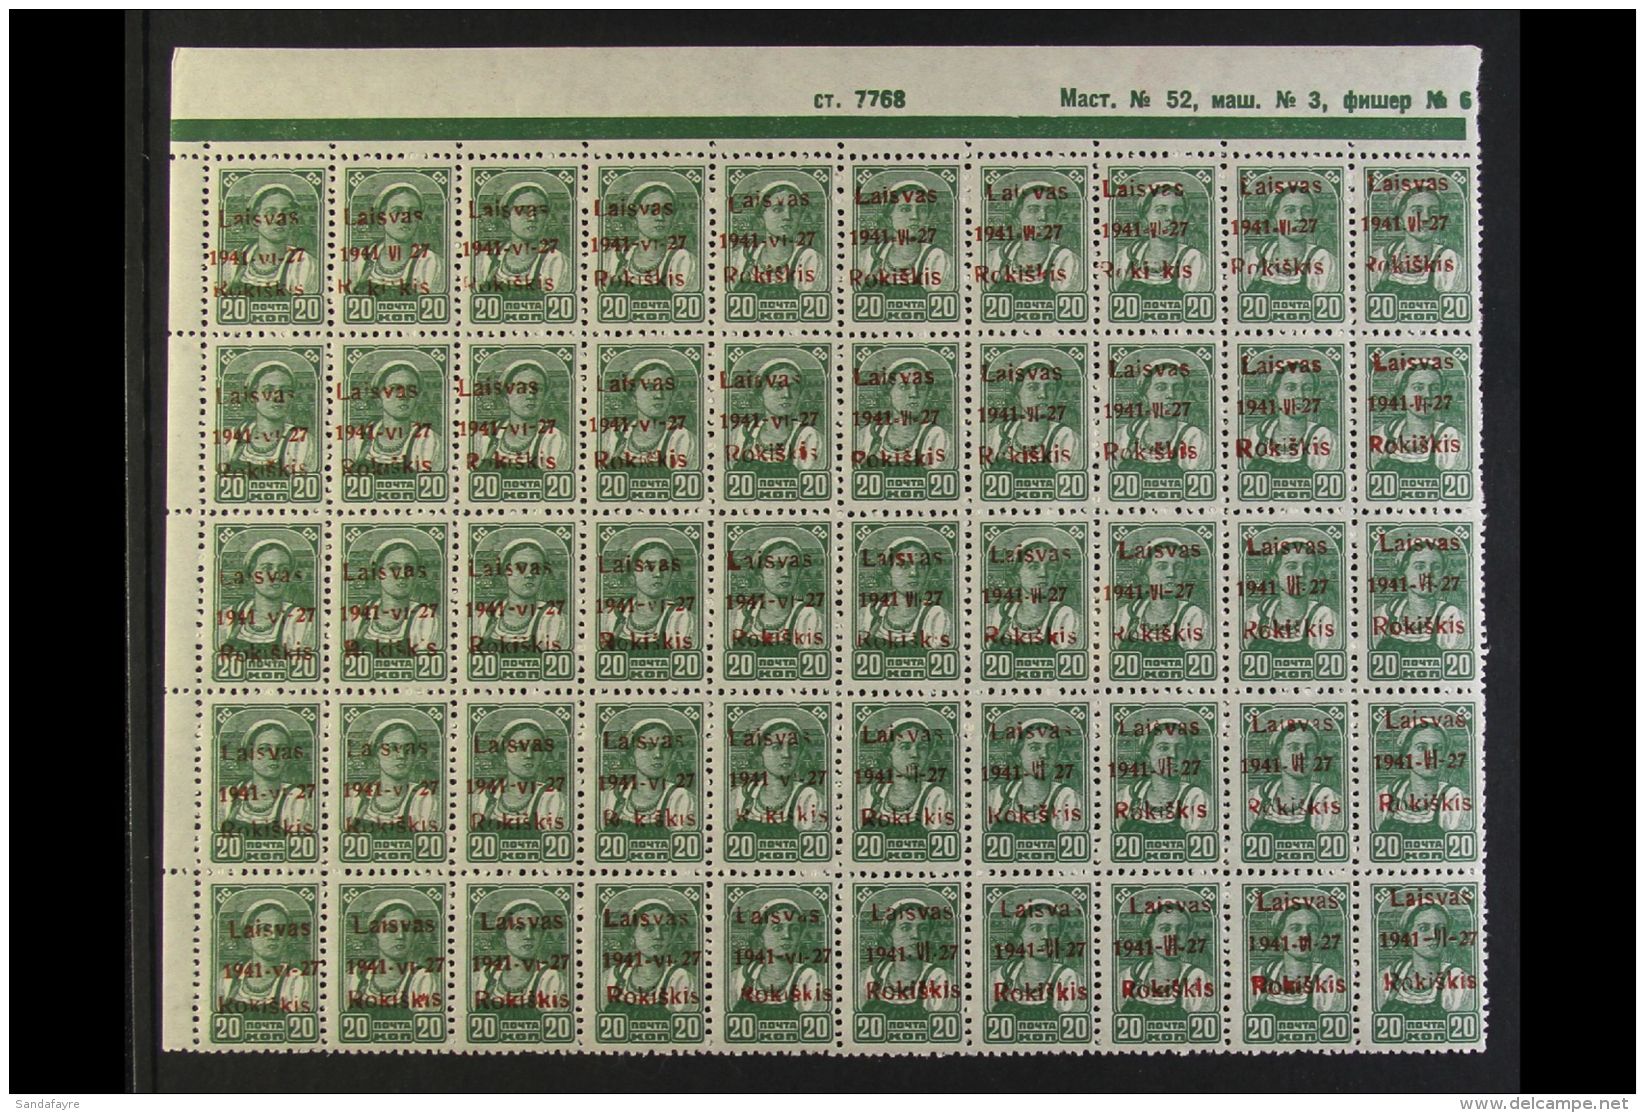 GERMAN OCCUPATION OF ROKISKIS 1941 20k Green Overprint In Brown-red, Michel 4b, Fine Never Hinged Mint Upper Left... - Litouwen